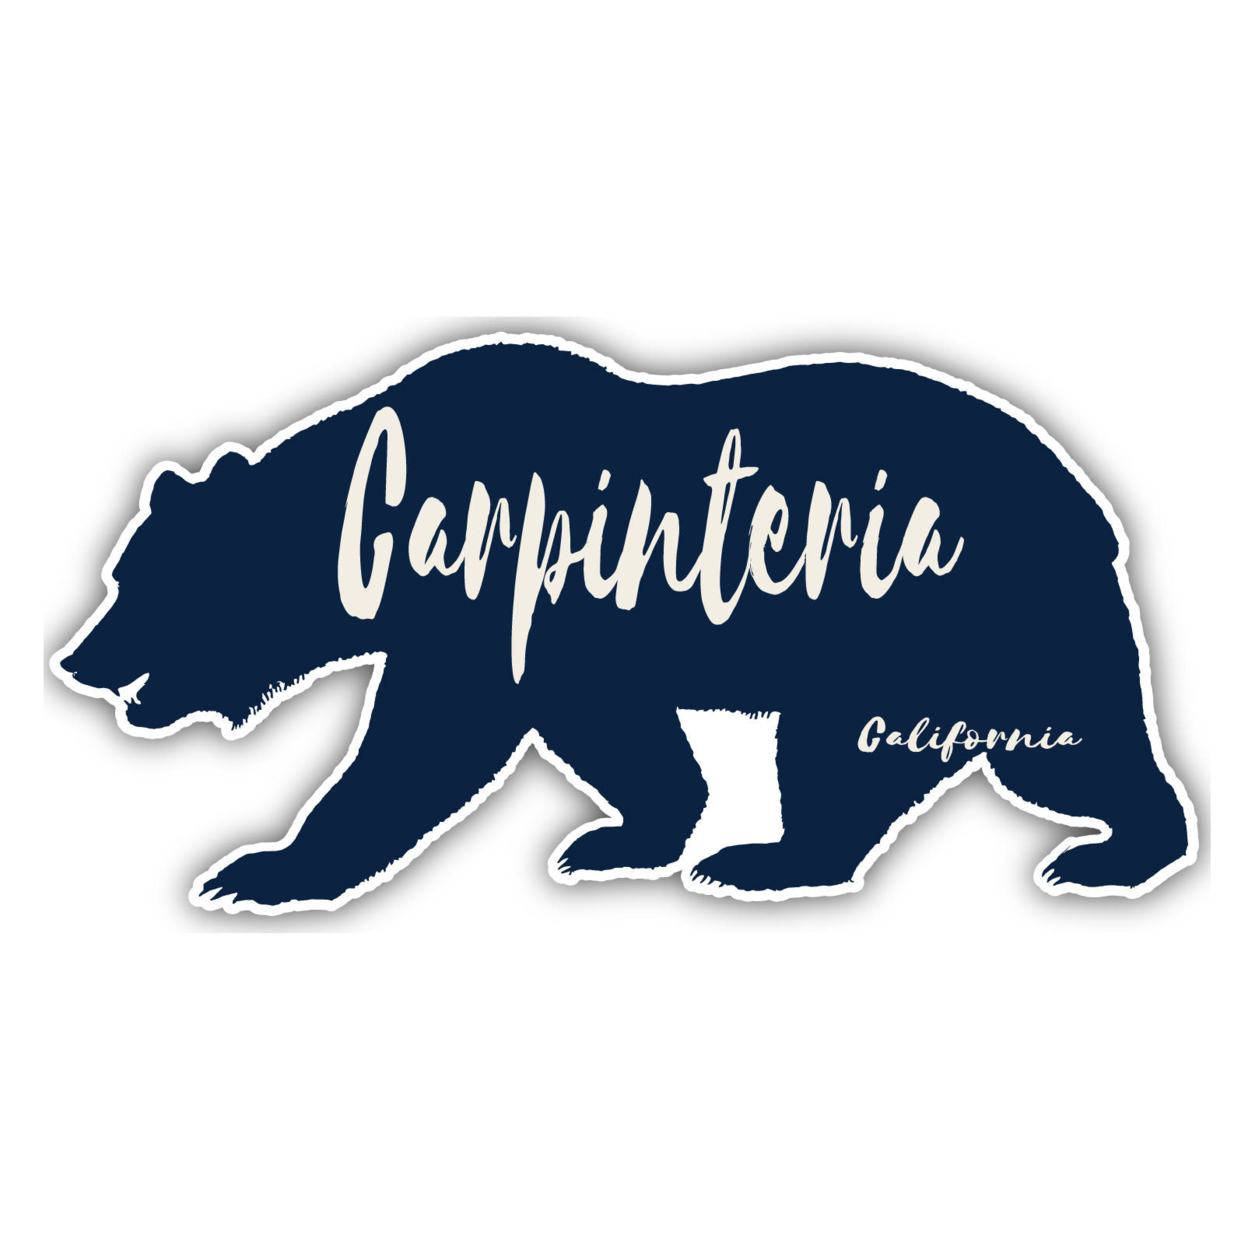 Carpinteria California Souvenir Decorative Stickers (Choose Theme And Size) - Single Unit, 2-Inch, Camp Life